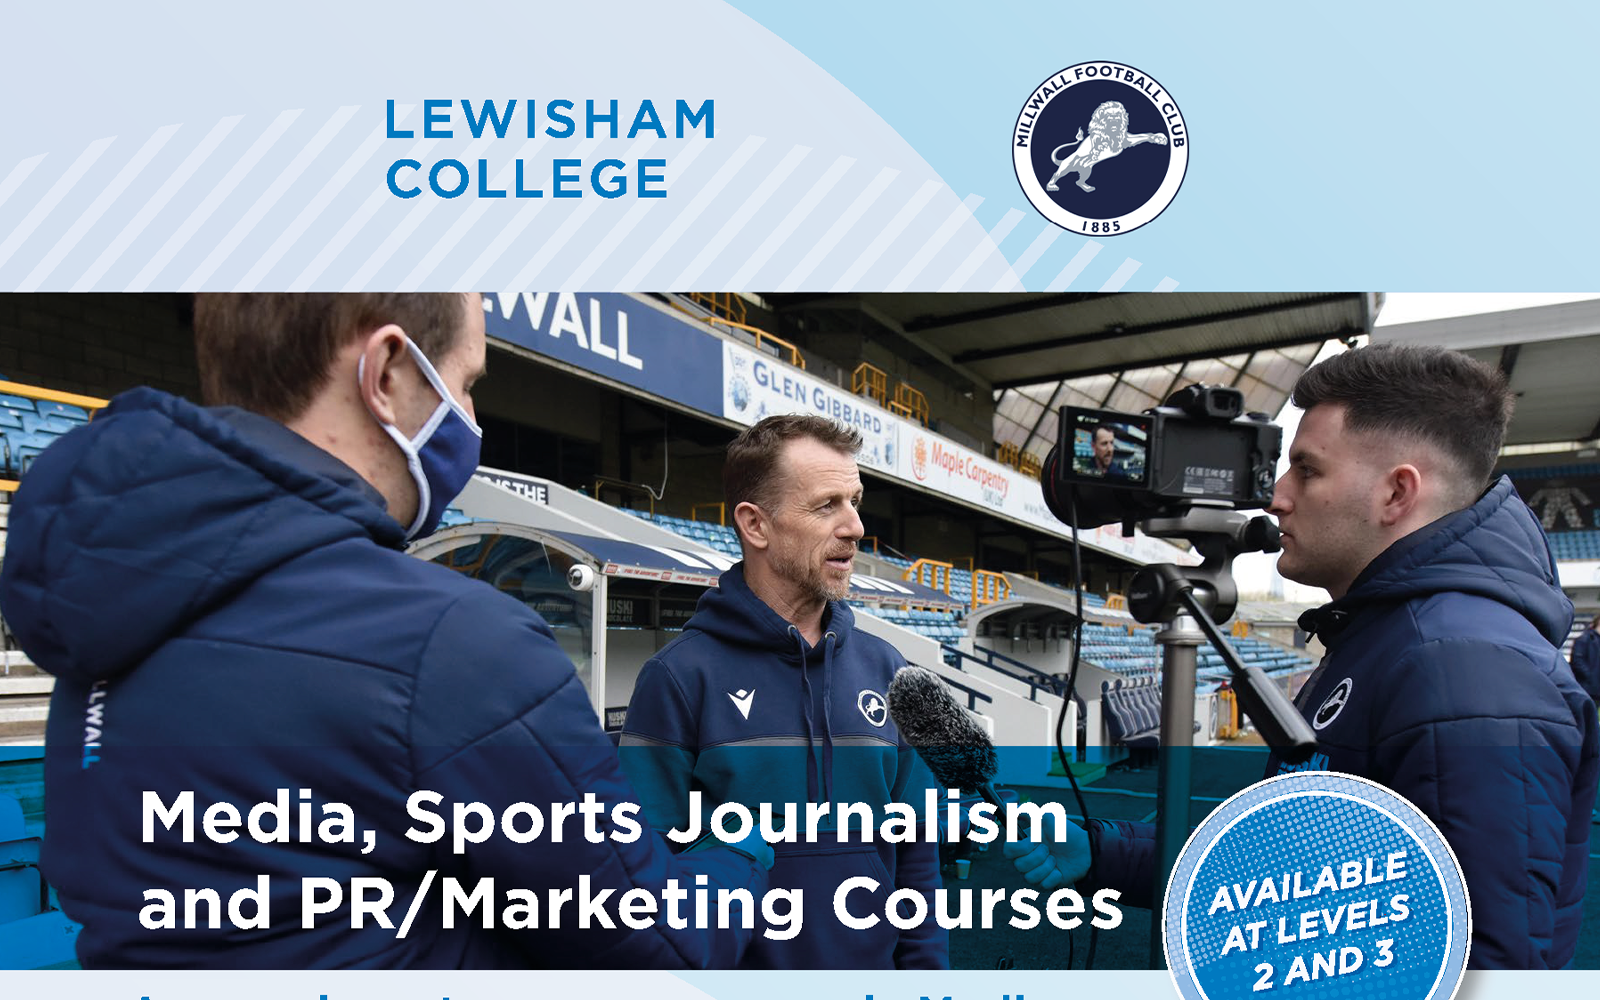 Millwall Community Trust - Media, Sports Journalism and PR/Marketing Courses